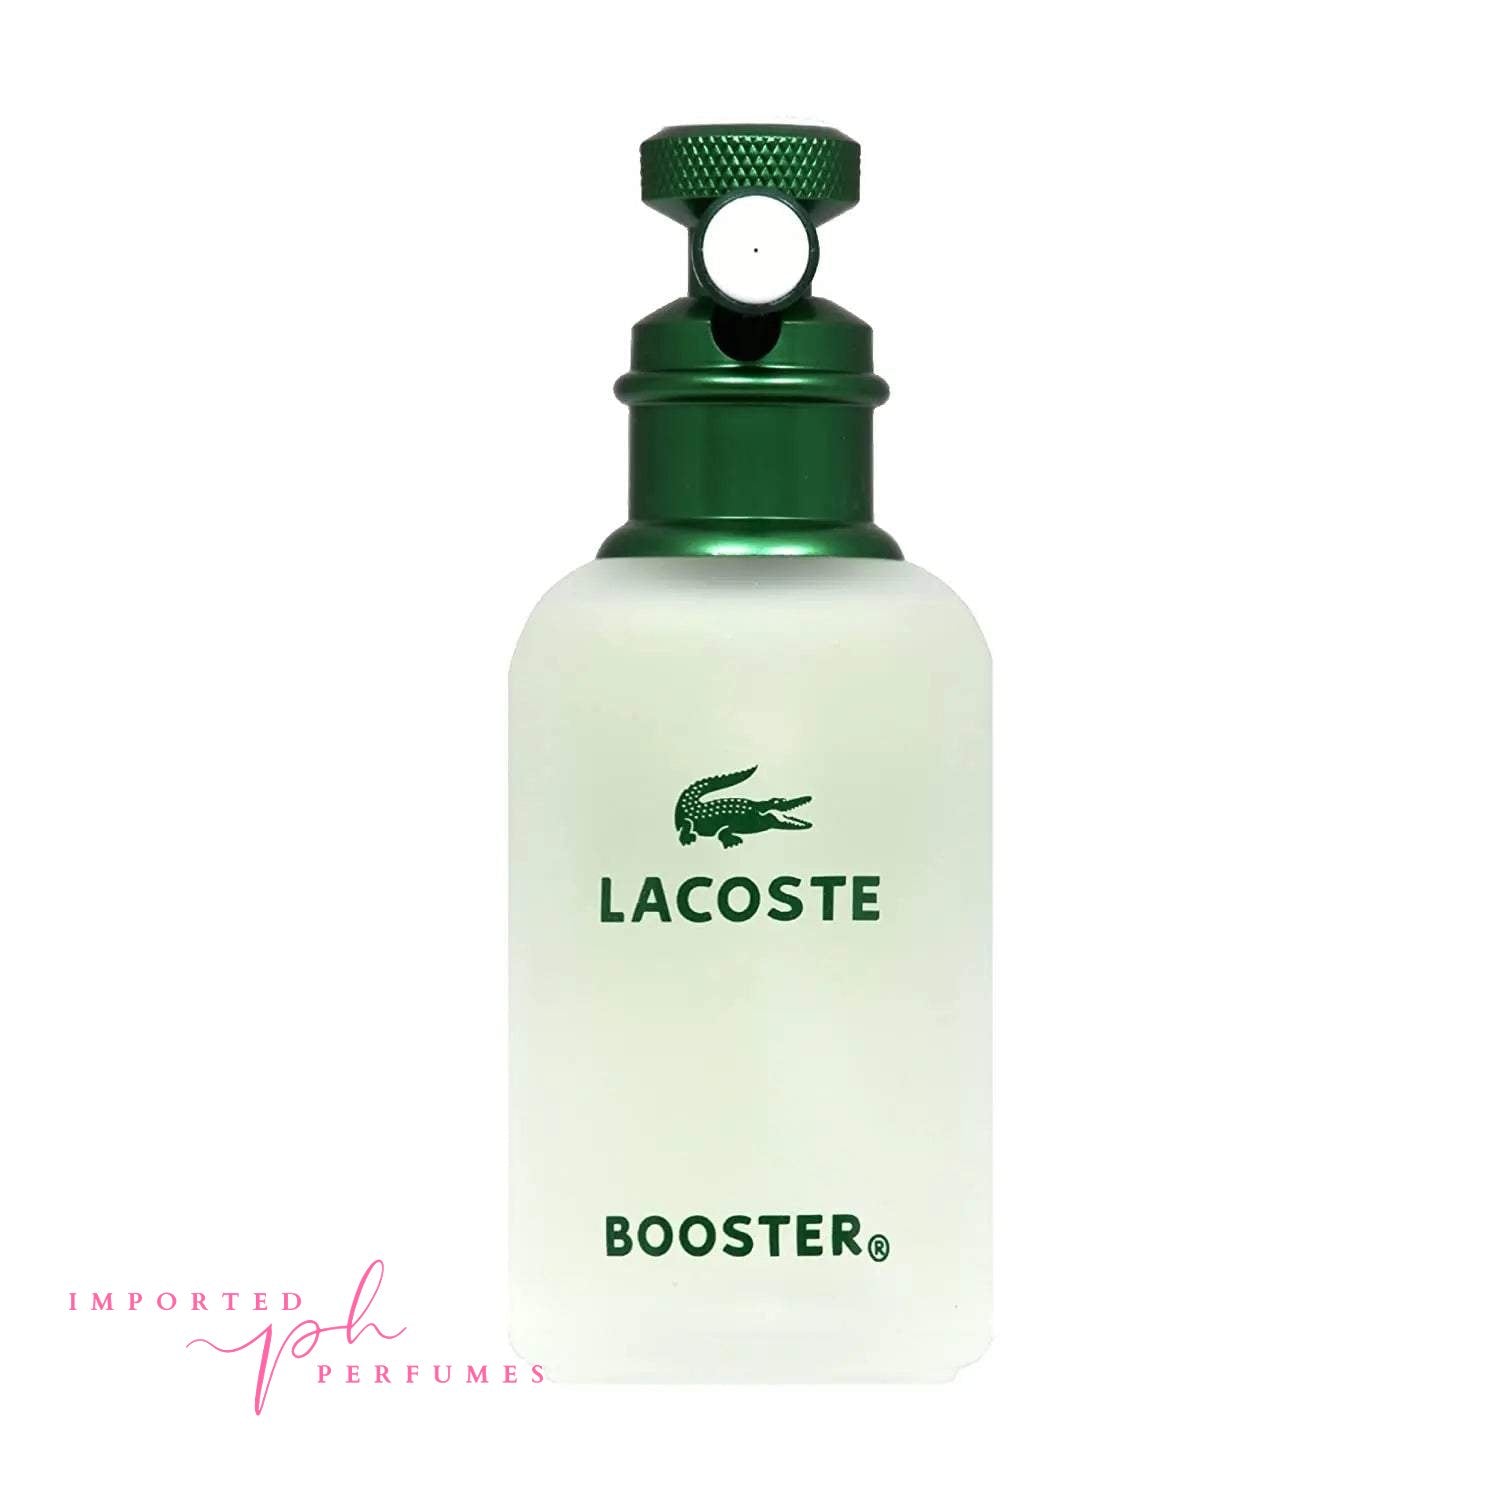 Lacoste Booster By Lacoste Eau de Toilette for Him 125ml-Imported Perfumes Co-125ml,booster,lacoste,men